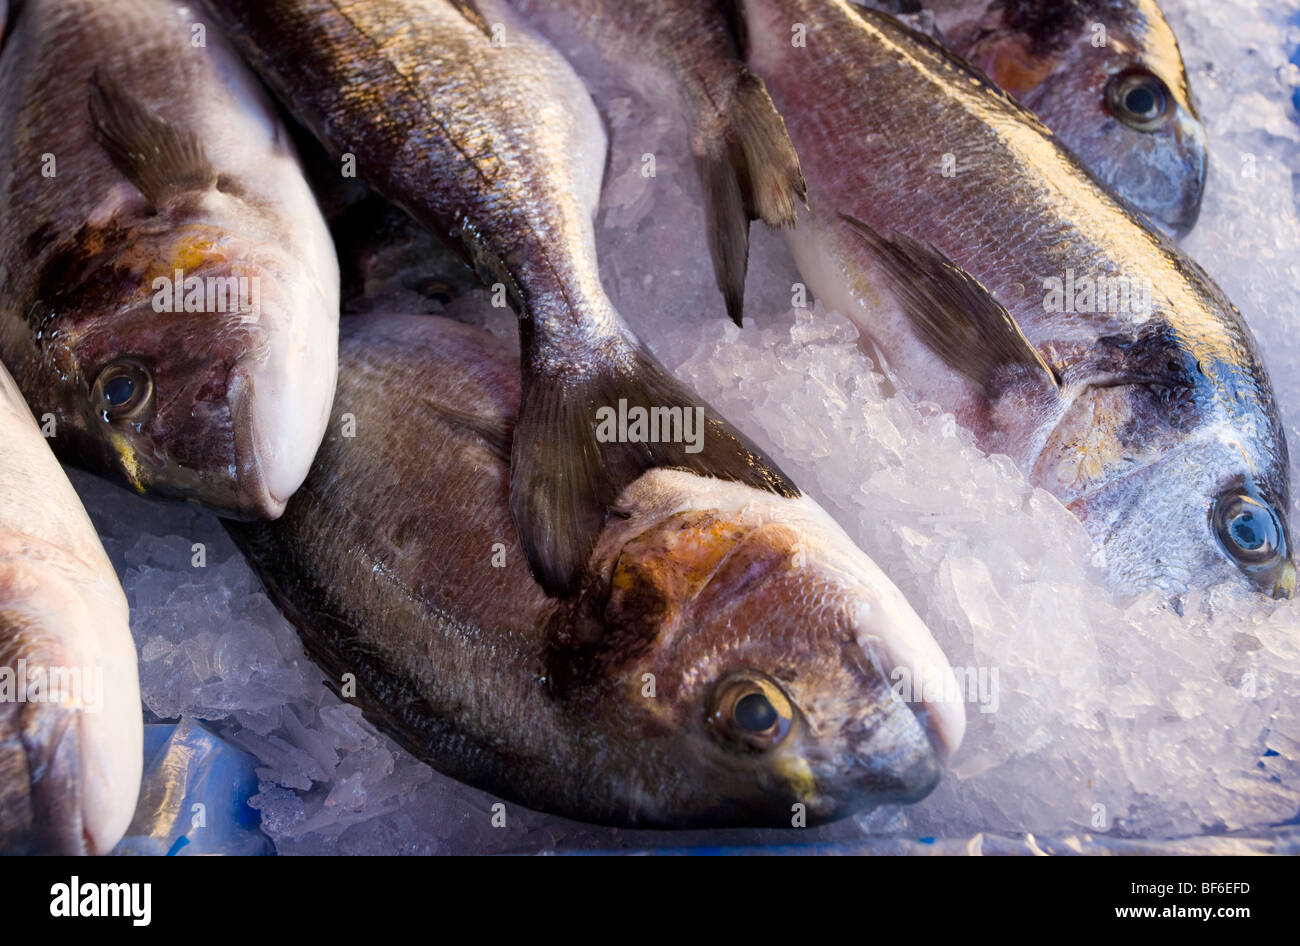 Fish Market, Place Saint-Francois, Nice, Cote D Azur, Provence, France Stock Photo